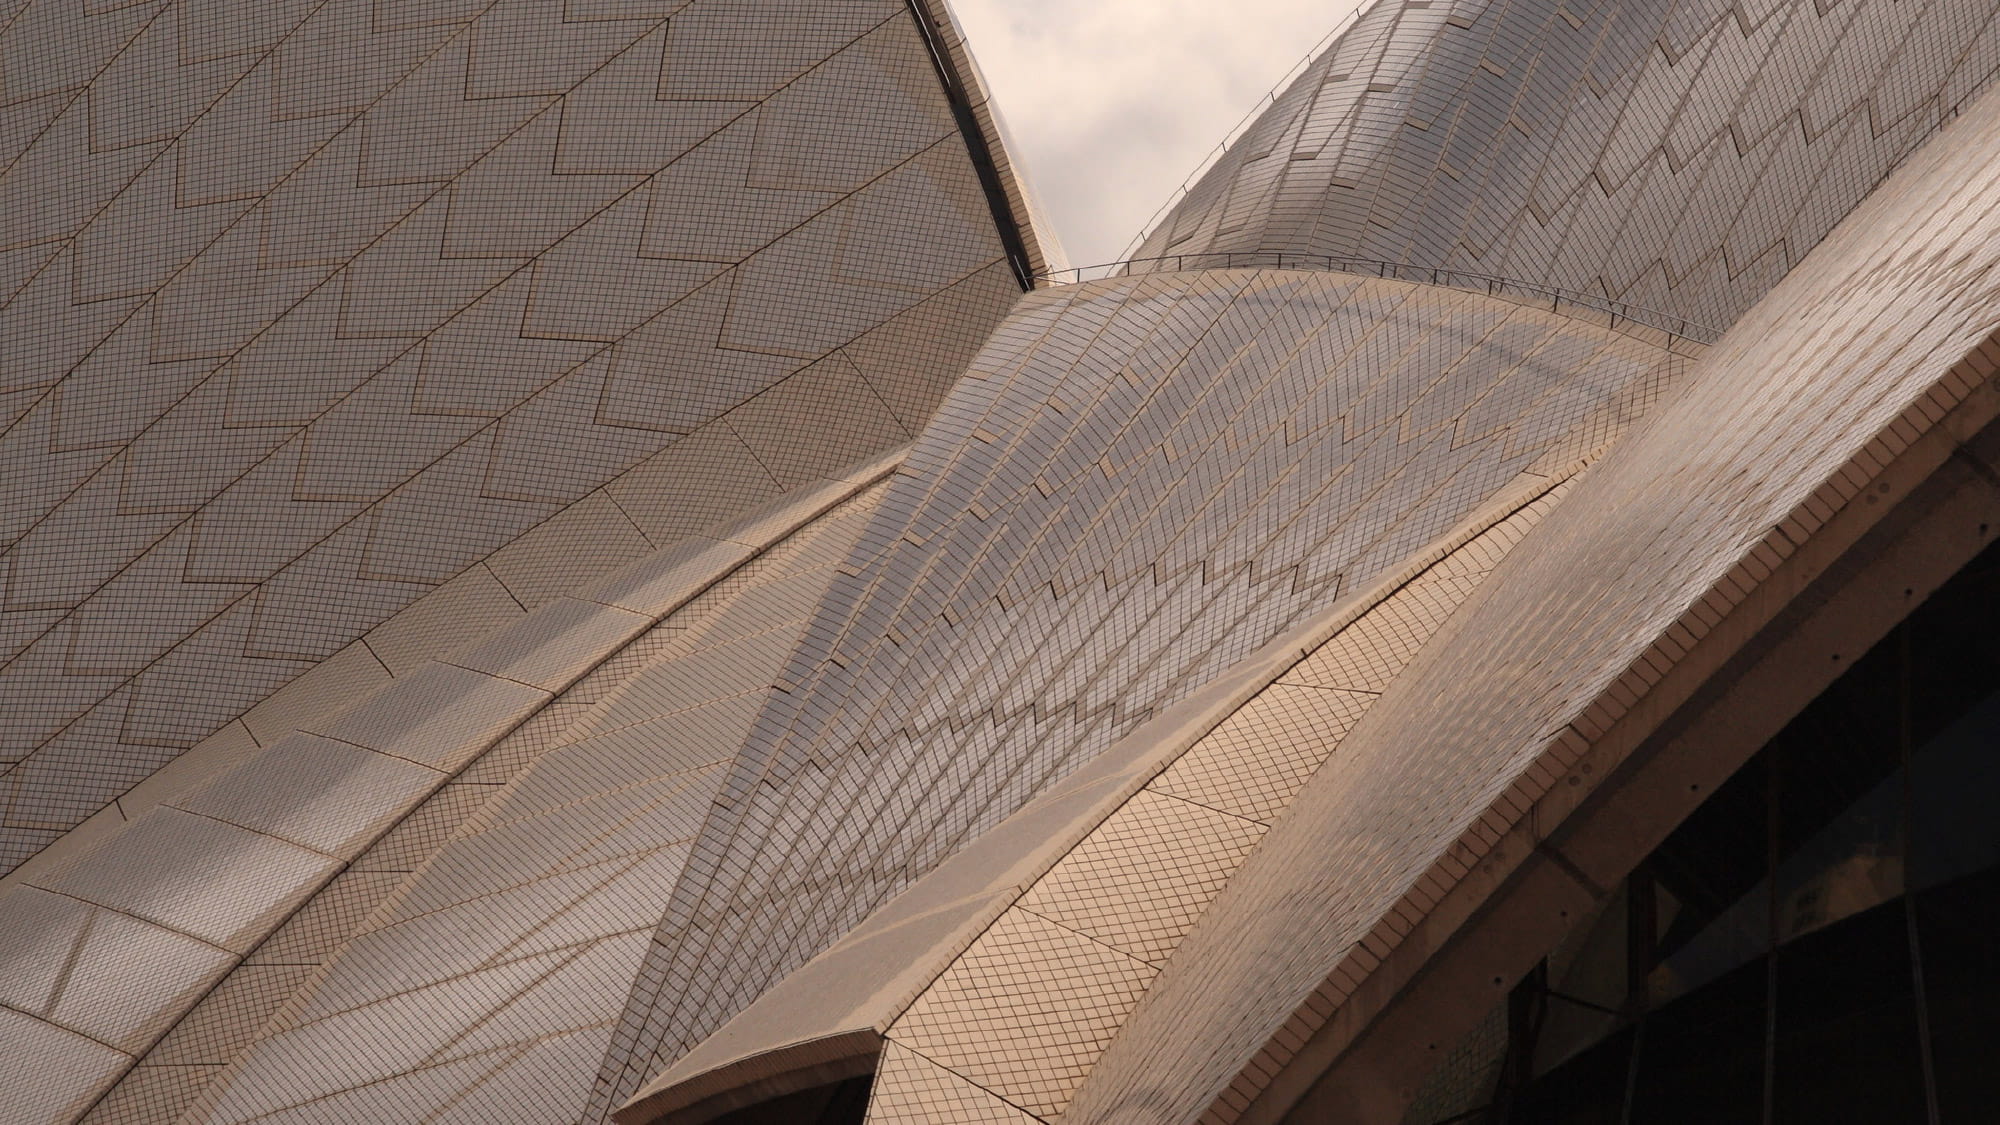 Sydney Opera House roof close up